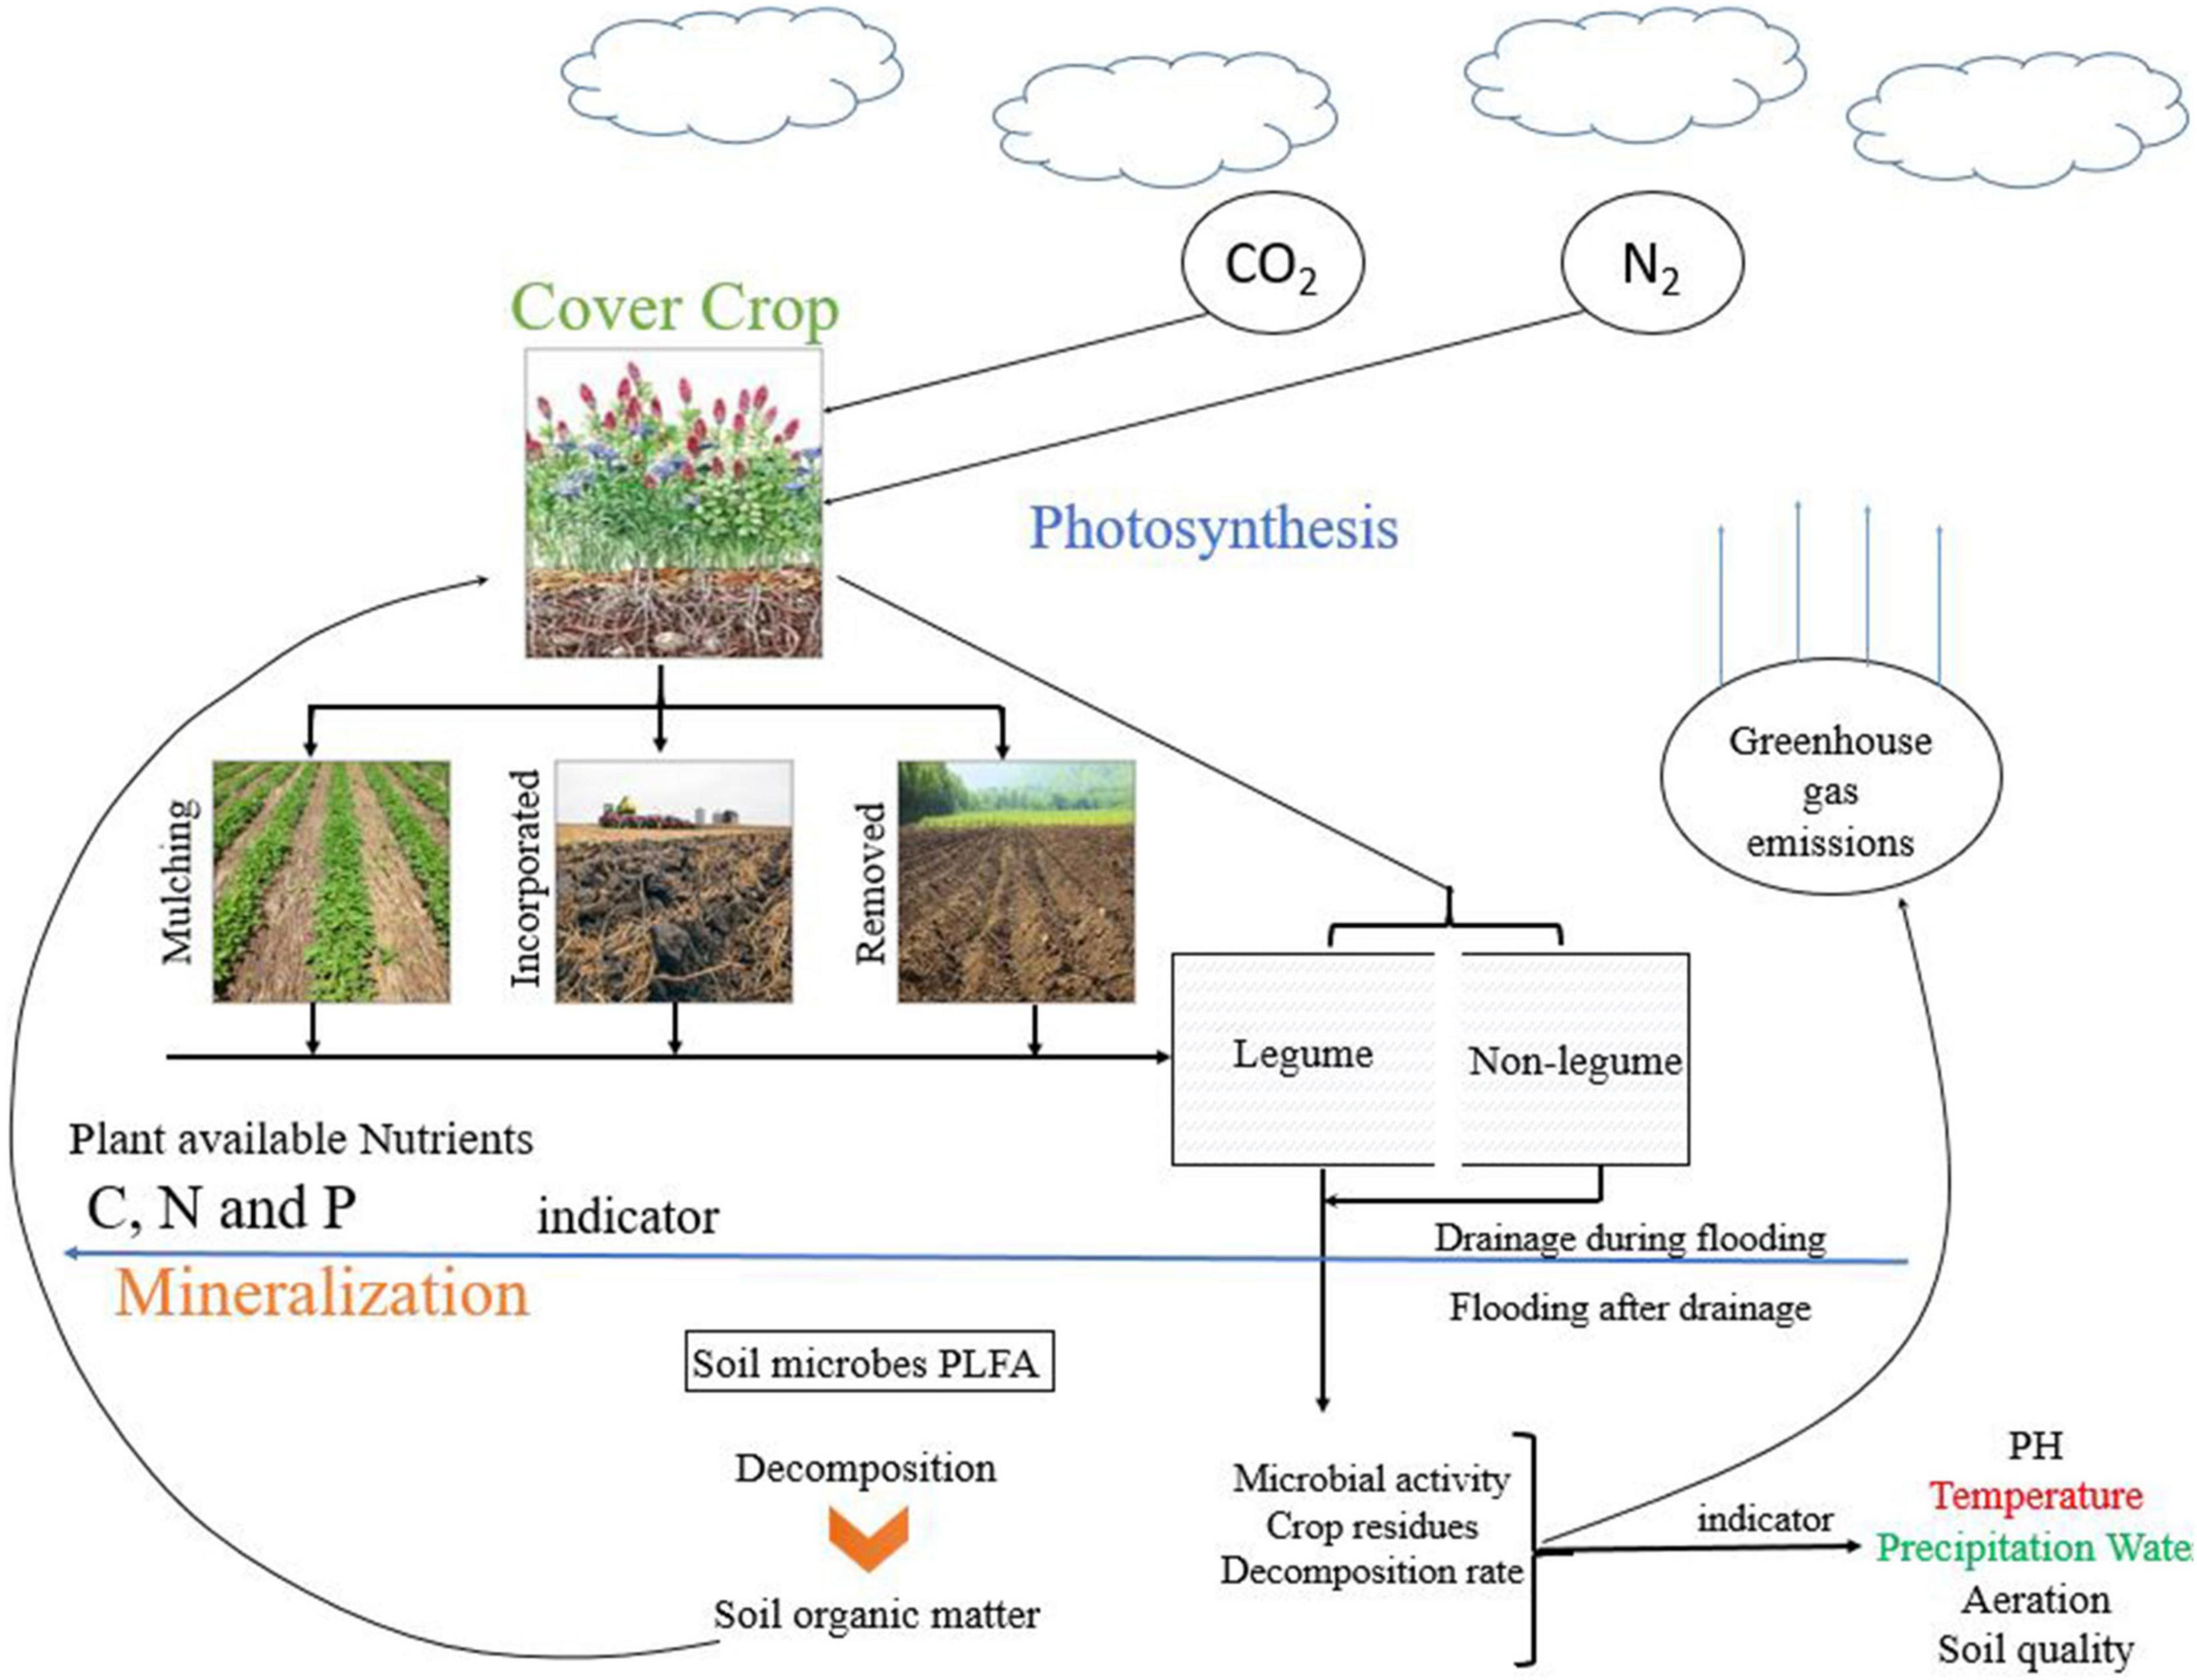 II. Understanding the Role of Hens in Soil Respiration